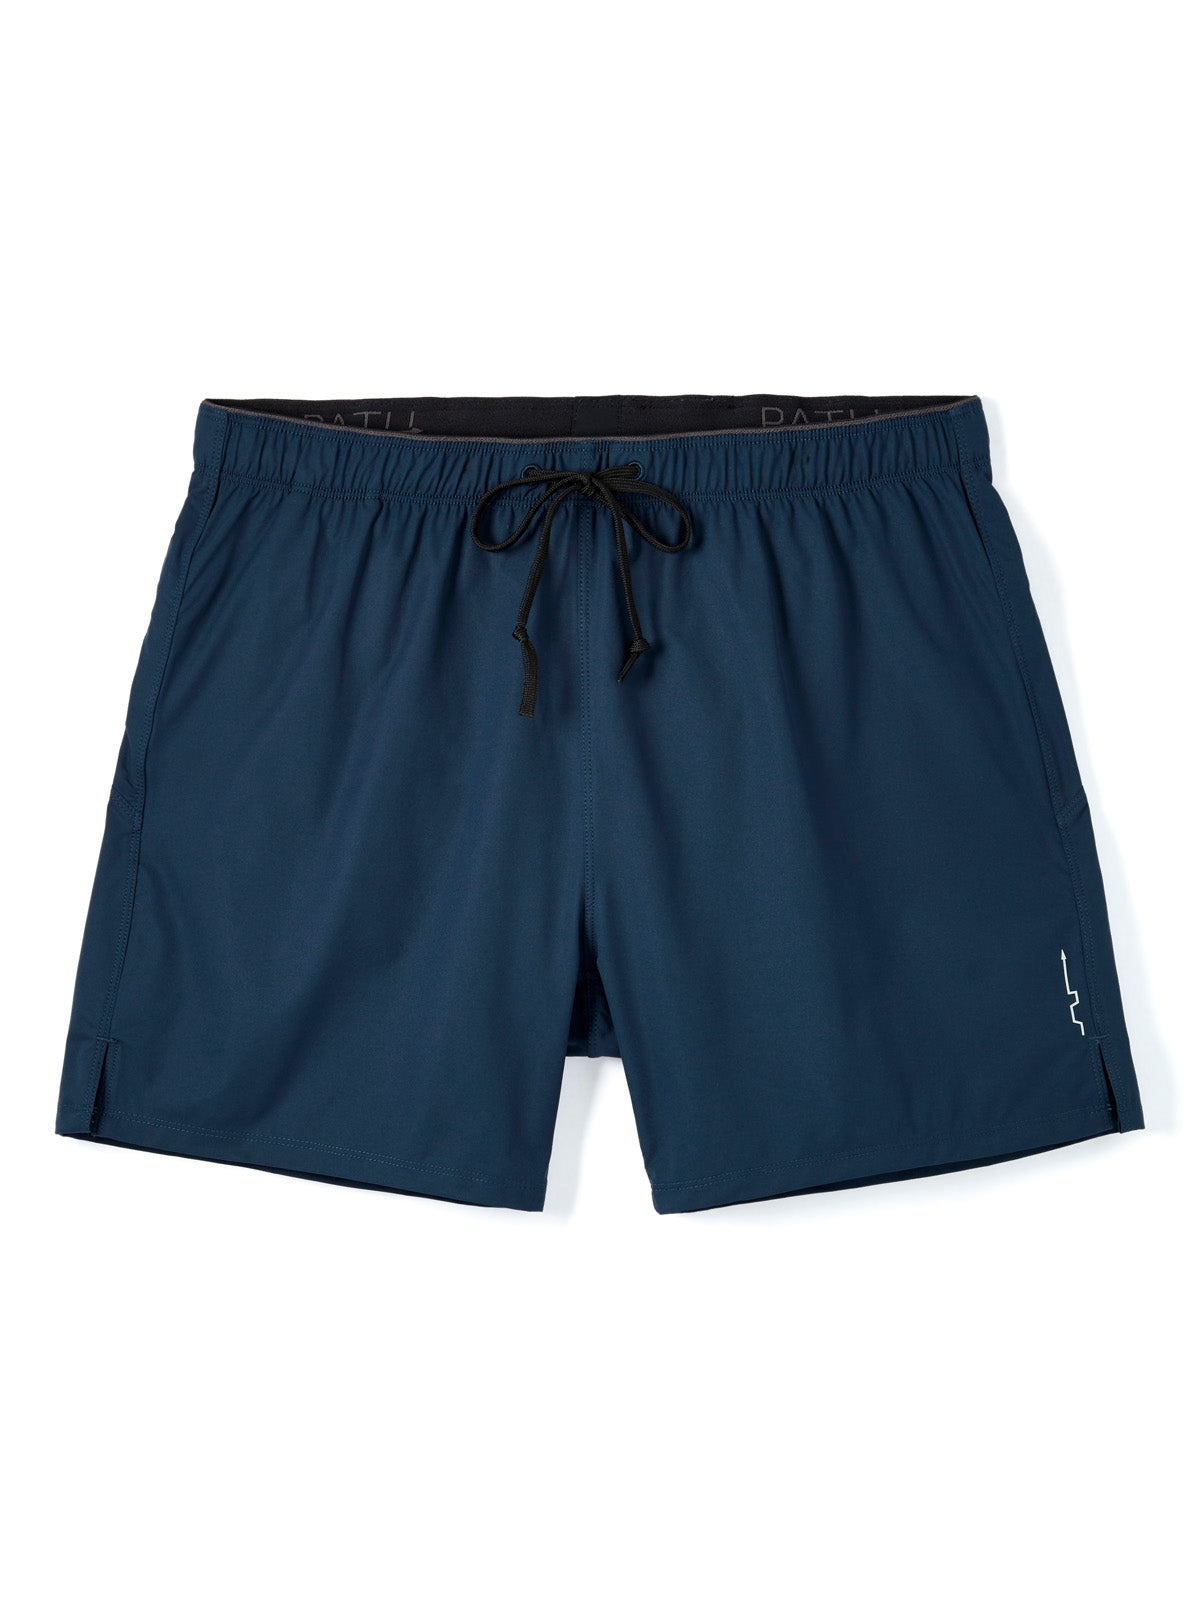 Sykes PX 5 Navy Shorts